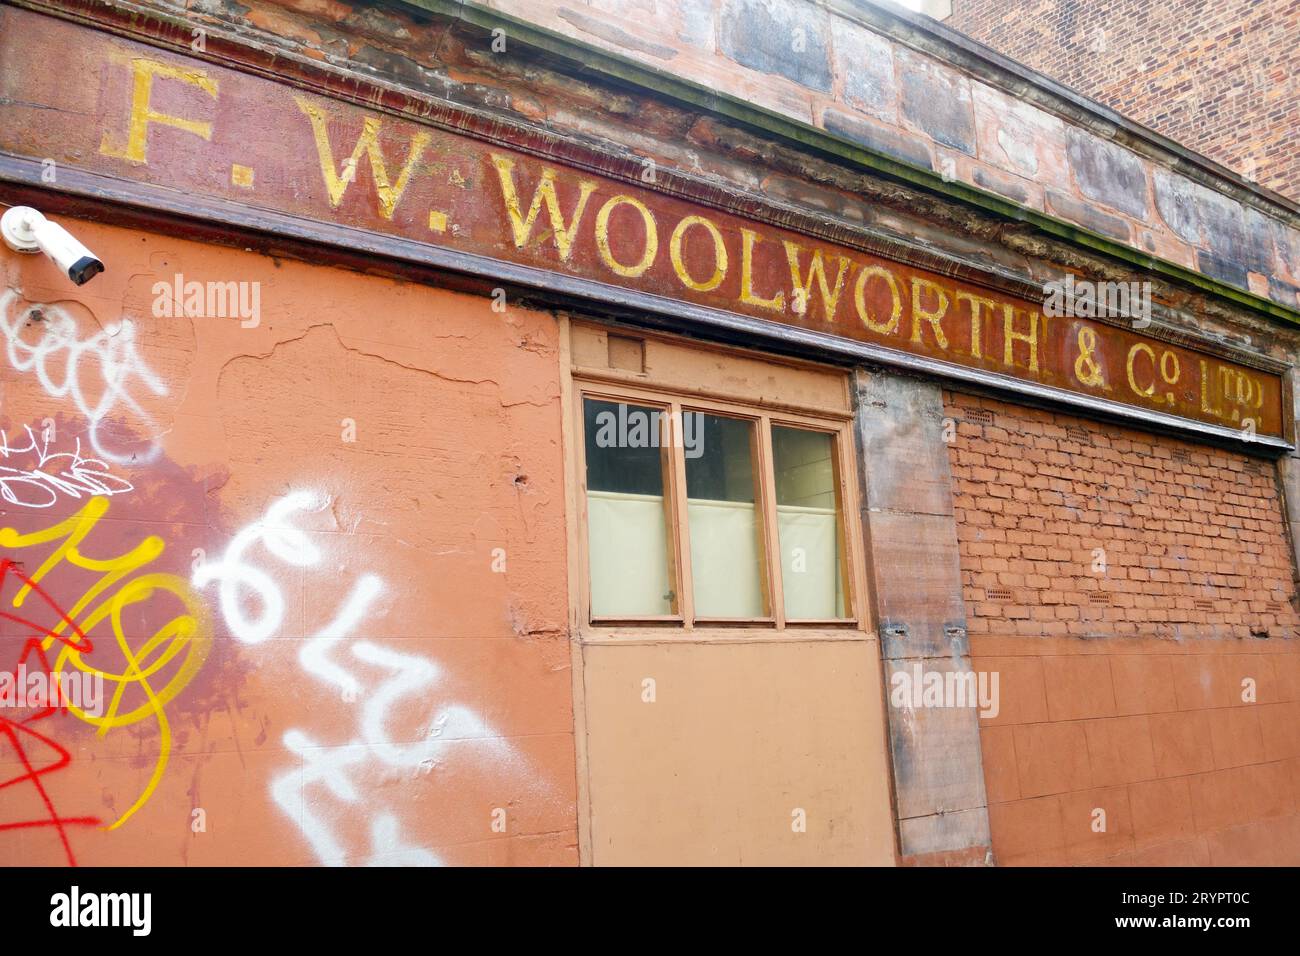 Original F. W. Woolworth & Co Ltd signage in Glasgow, Scotland Stock Photo